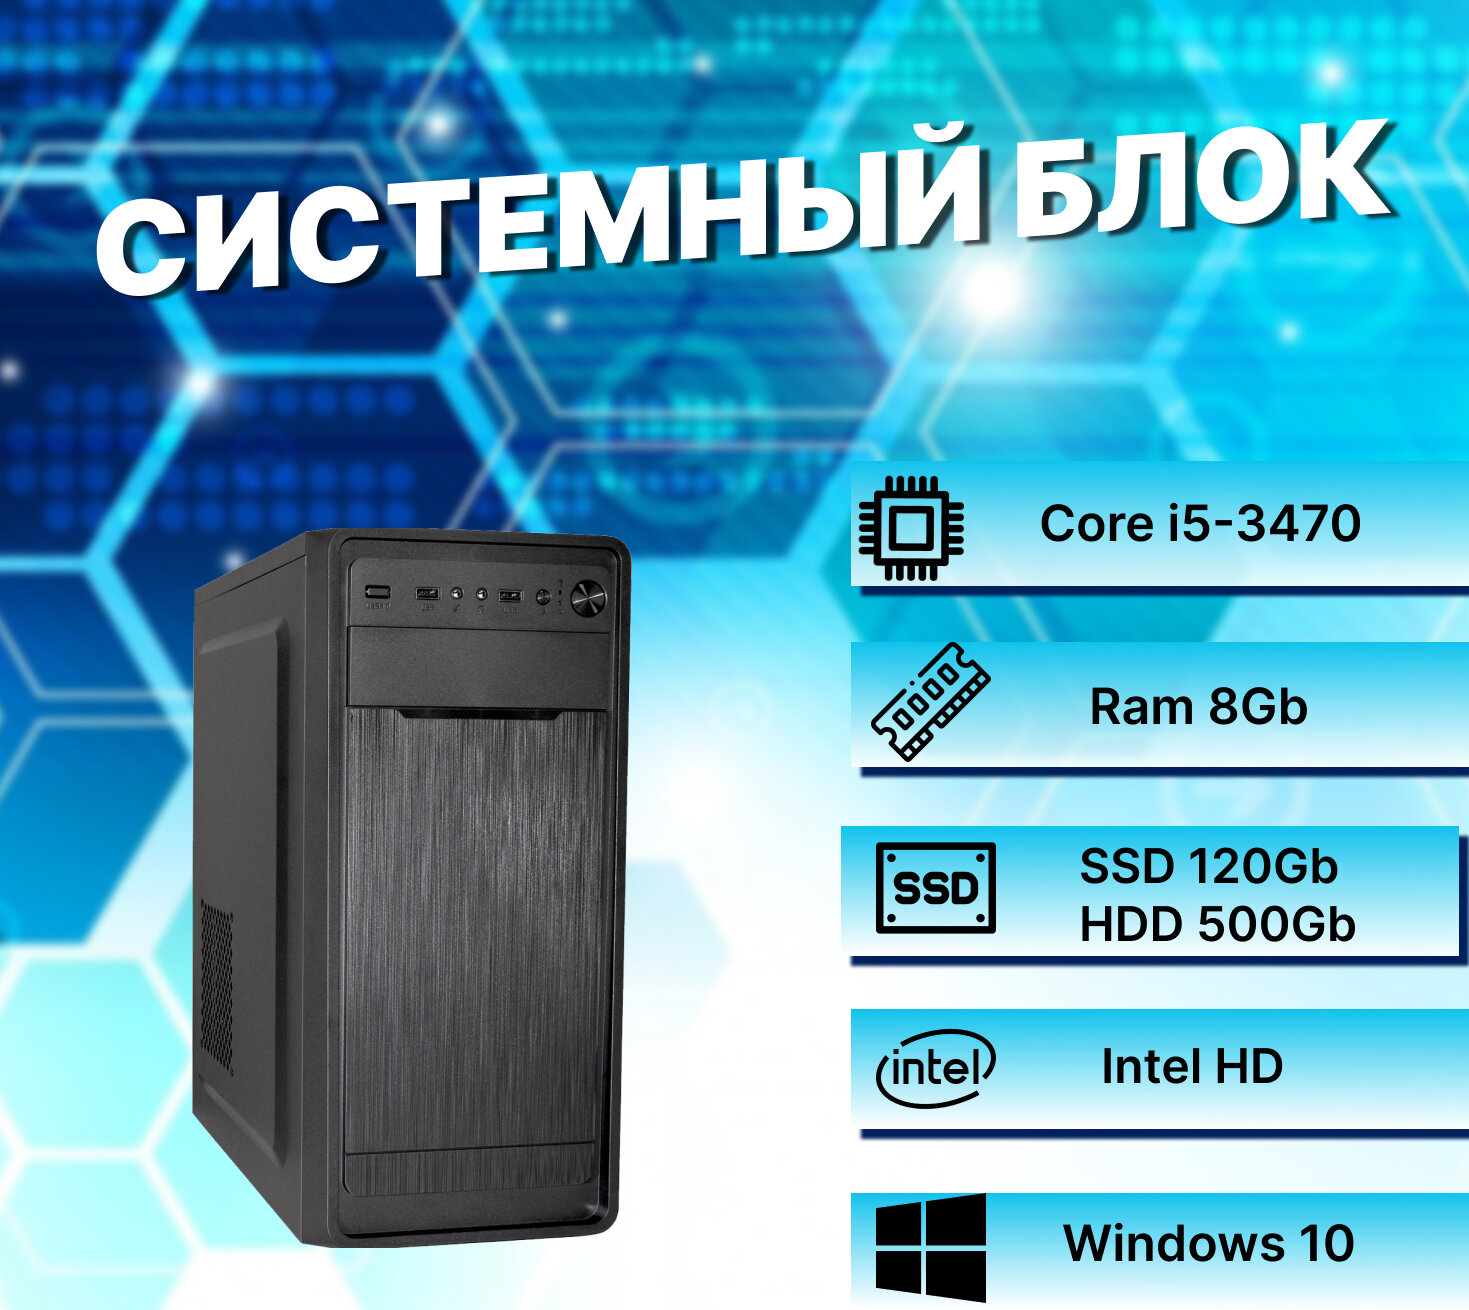 Системный блок Intel Core I5-3470 (3.2ГГц)/ RAM 8Gb/ SSD 120Gb/ HDD 500Gb/ Intel HD/ Windows 10 Pro